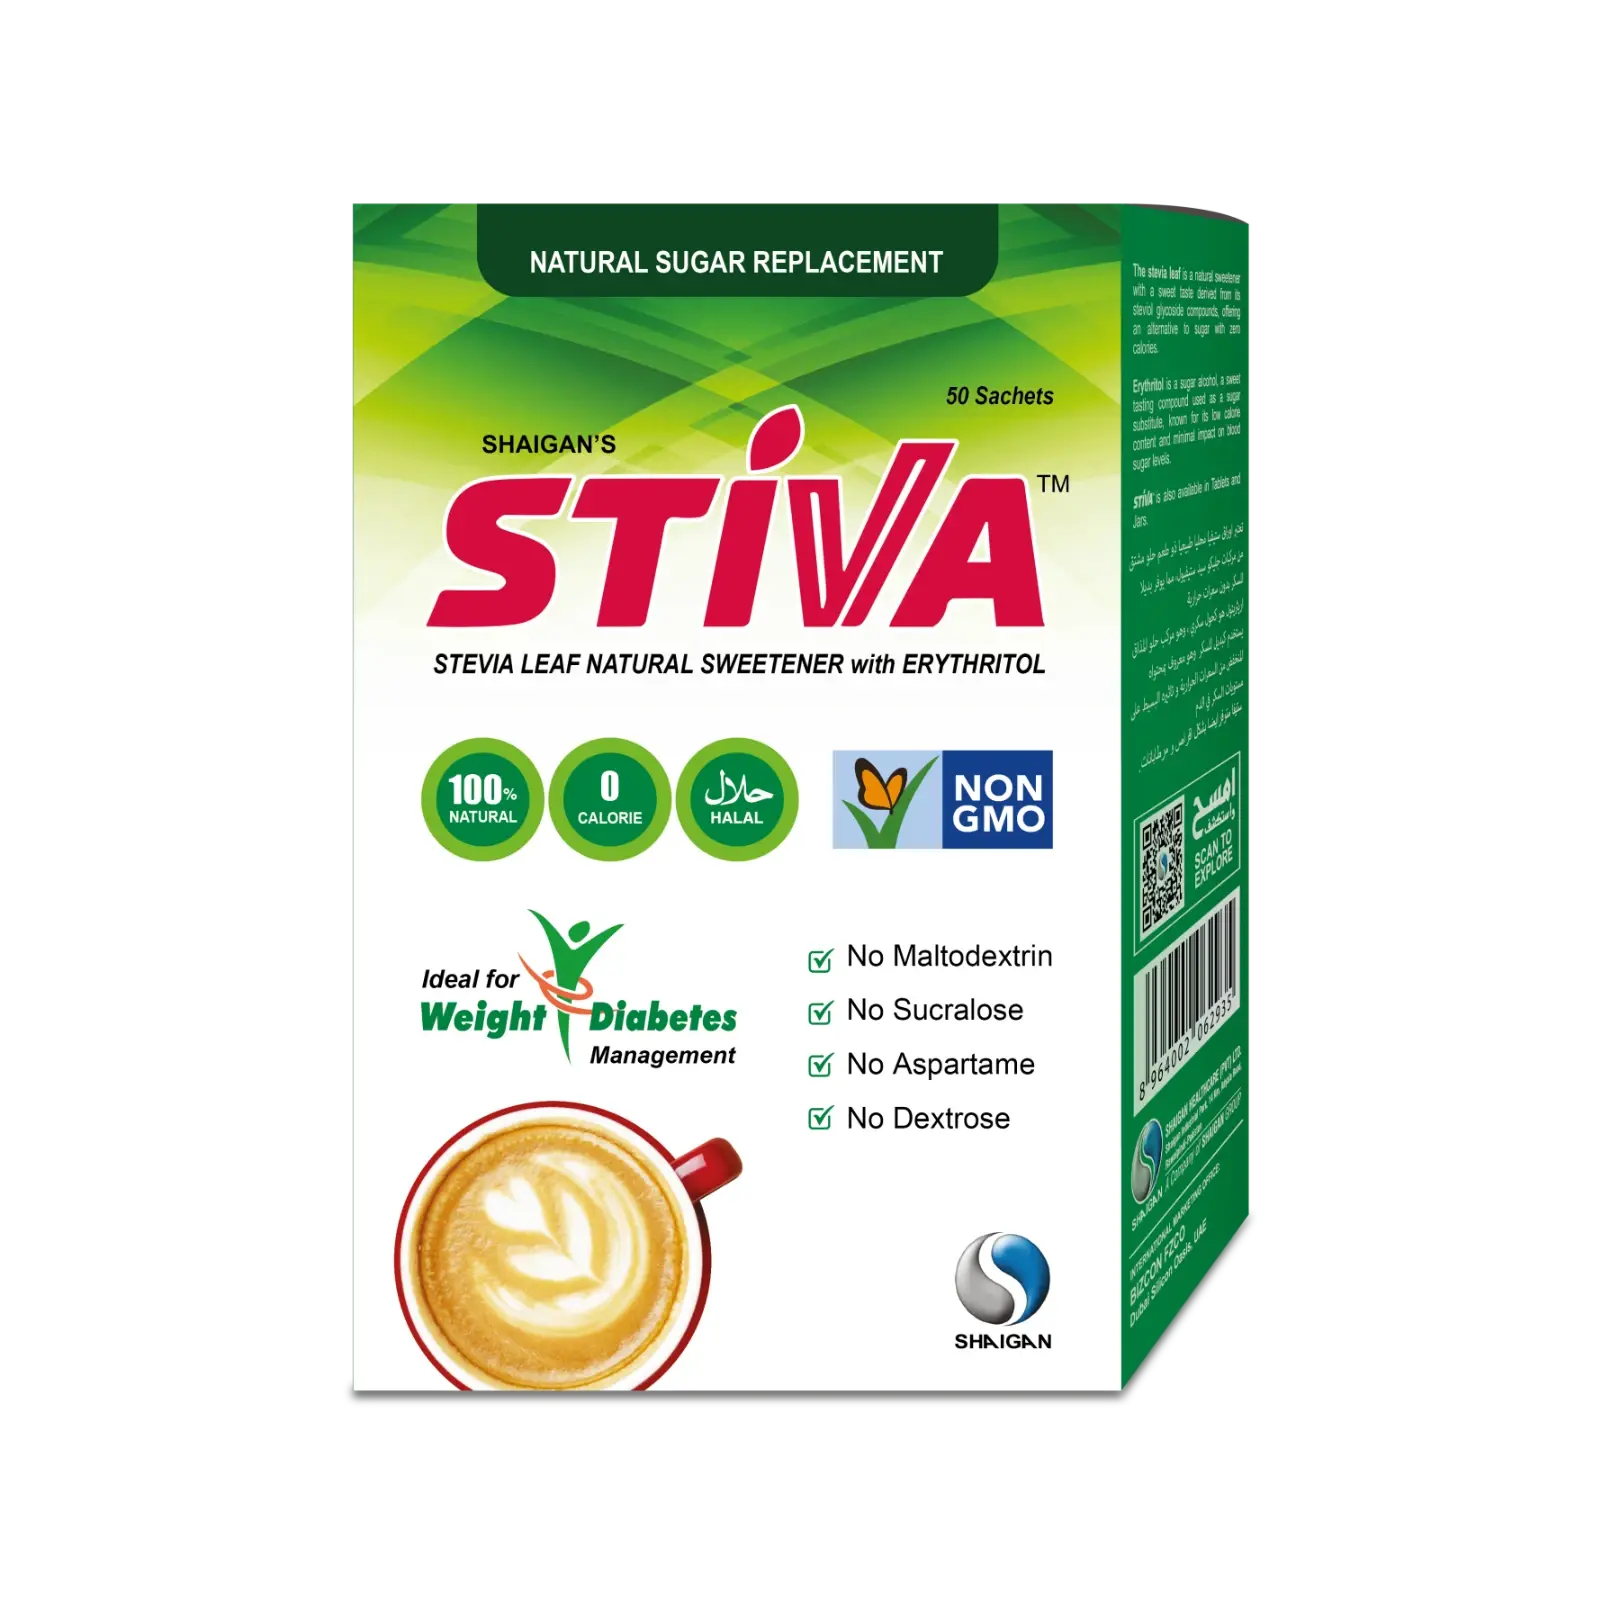 Stiva natural stevia sweetener Pakistan | 50 Sachet Box Shaigan Health Care